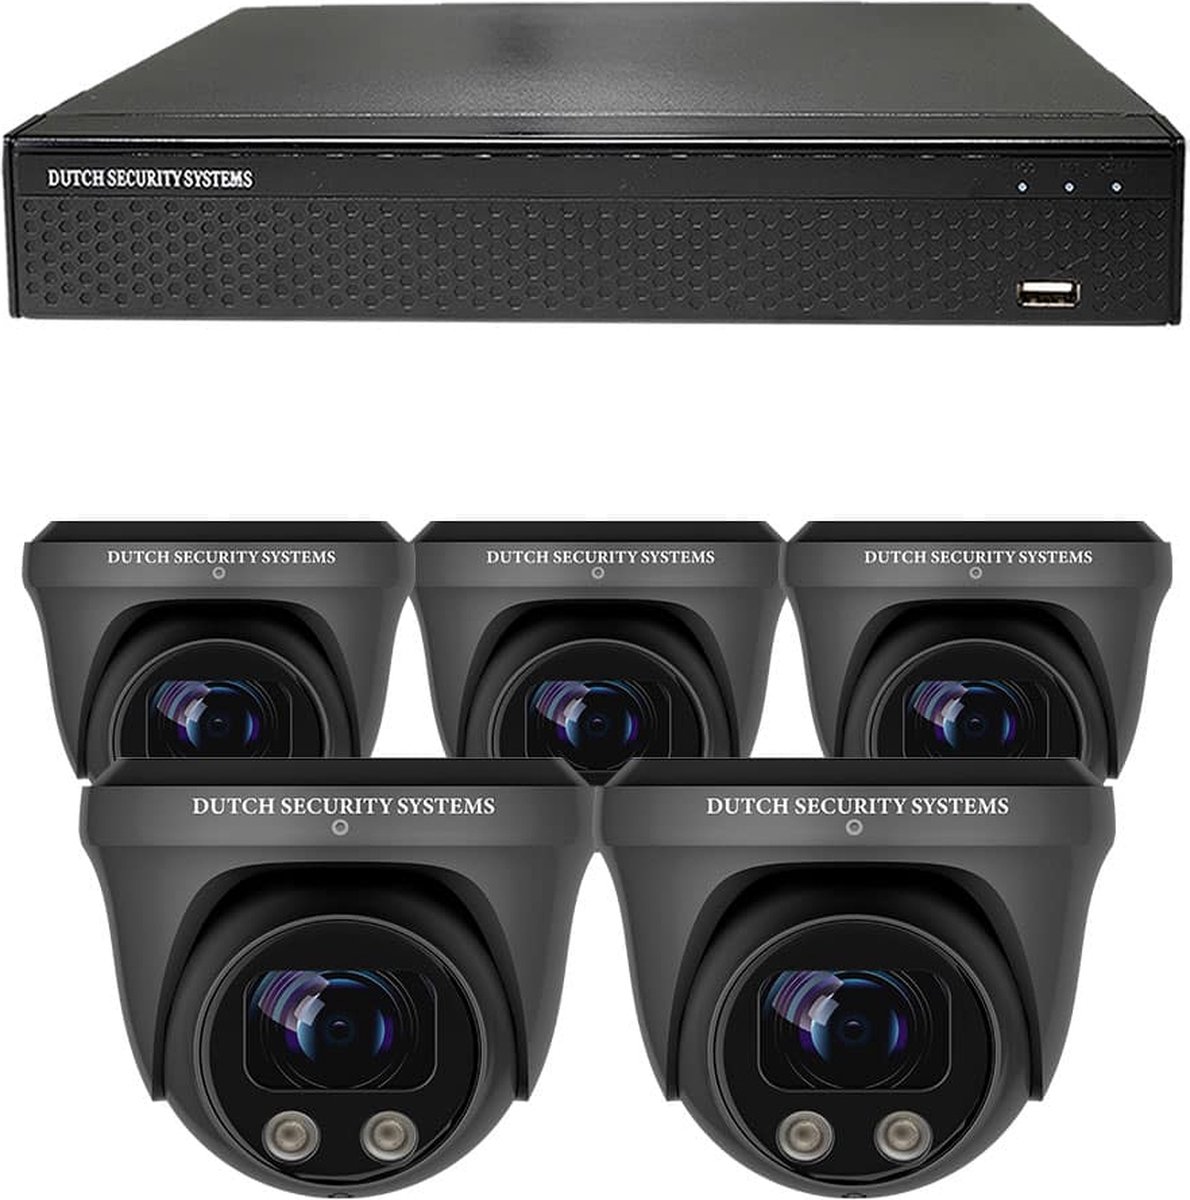 Beveiligingscamera Set - 5x PRO Dome Camera - UltraHD 4K - Sony 8MP - Zwart - Buiten & Binnen - Met Nachtzicht - Incl. Recorder & App